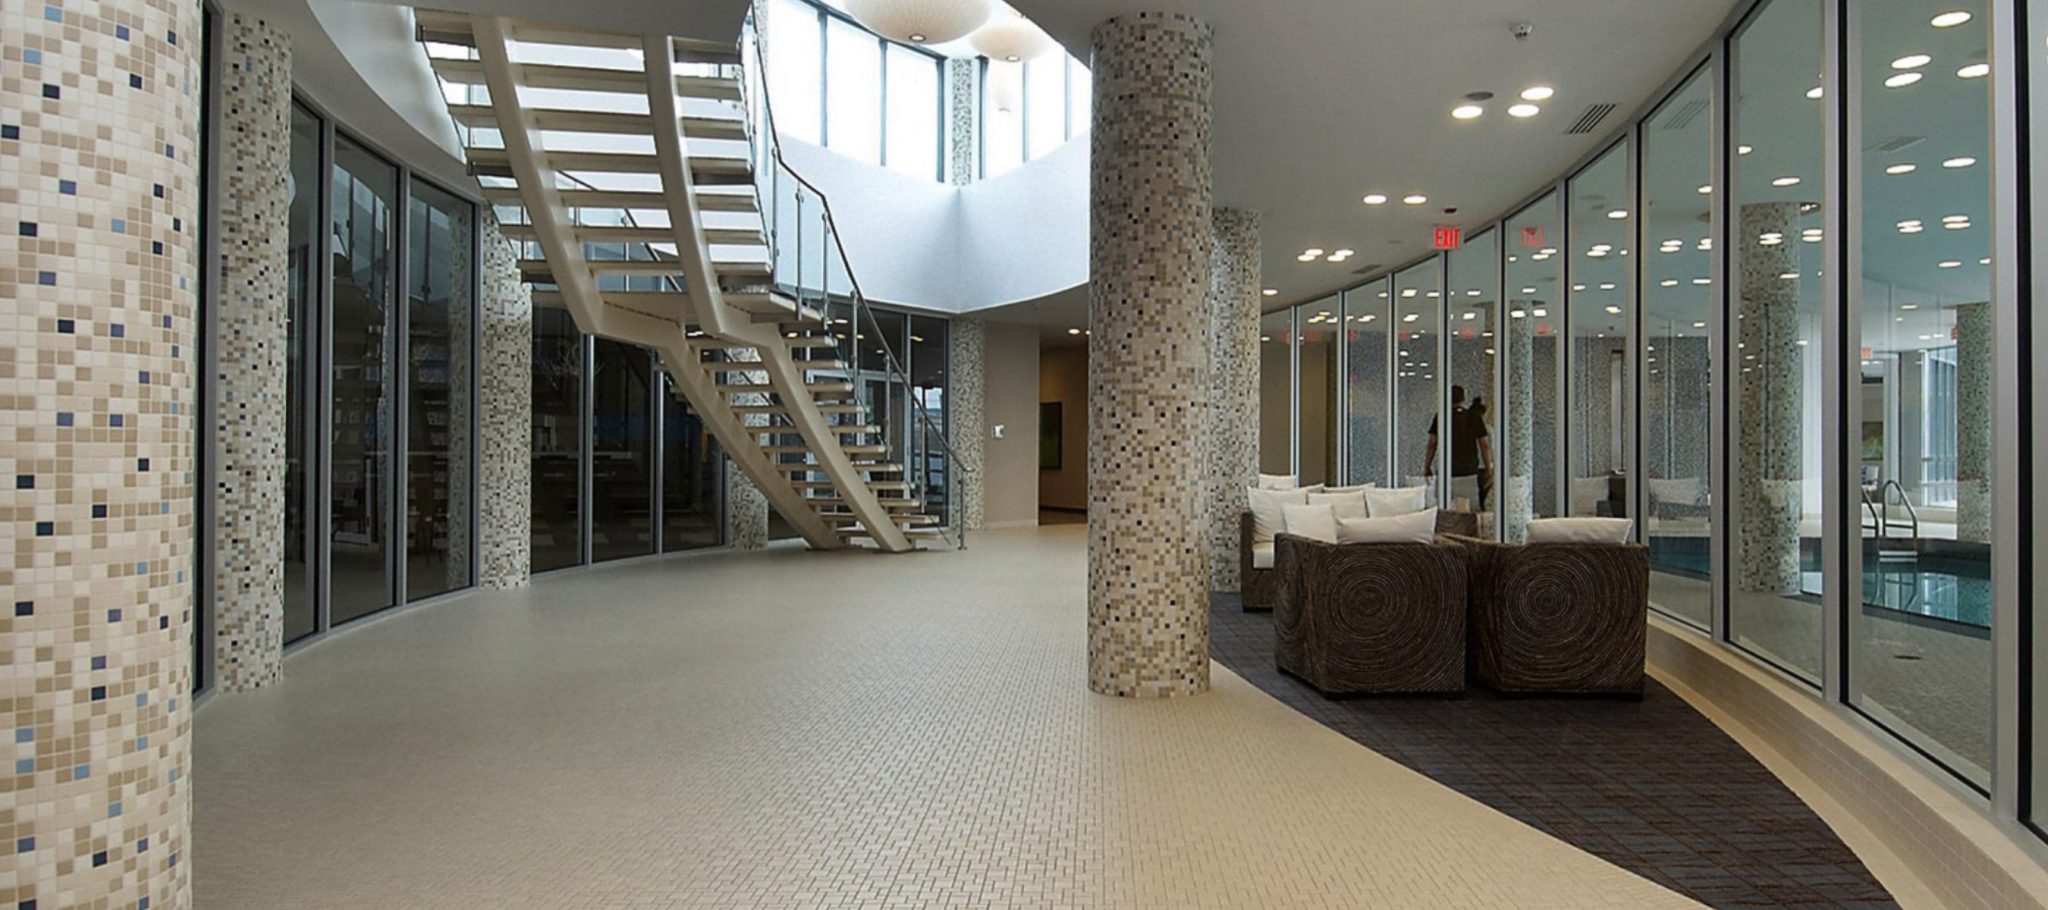 Condo Management Best Practices. Beyond The Sea-South Tower. Etobicoke. Toronto. Duke property management